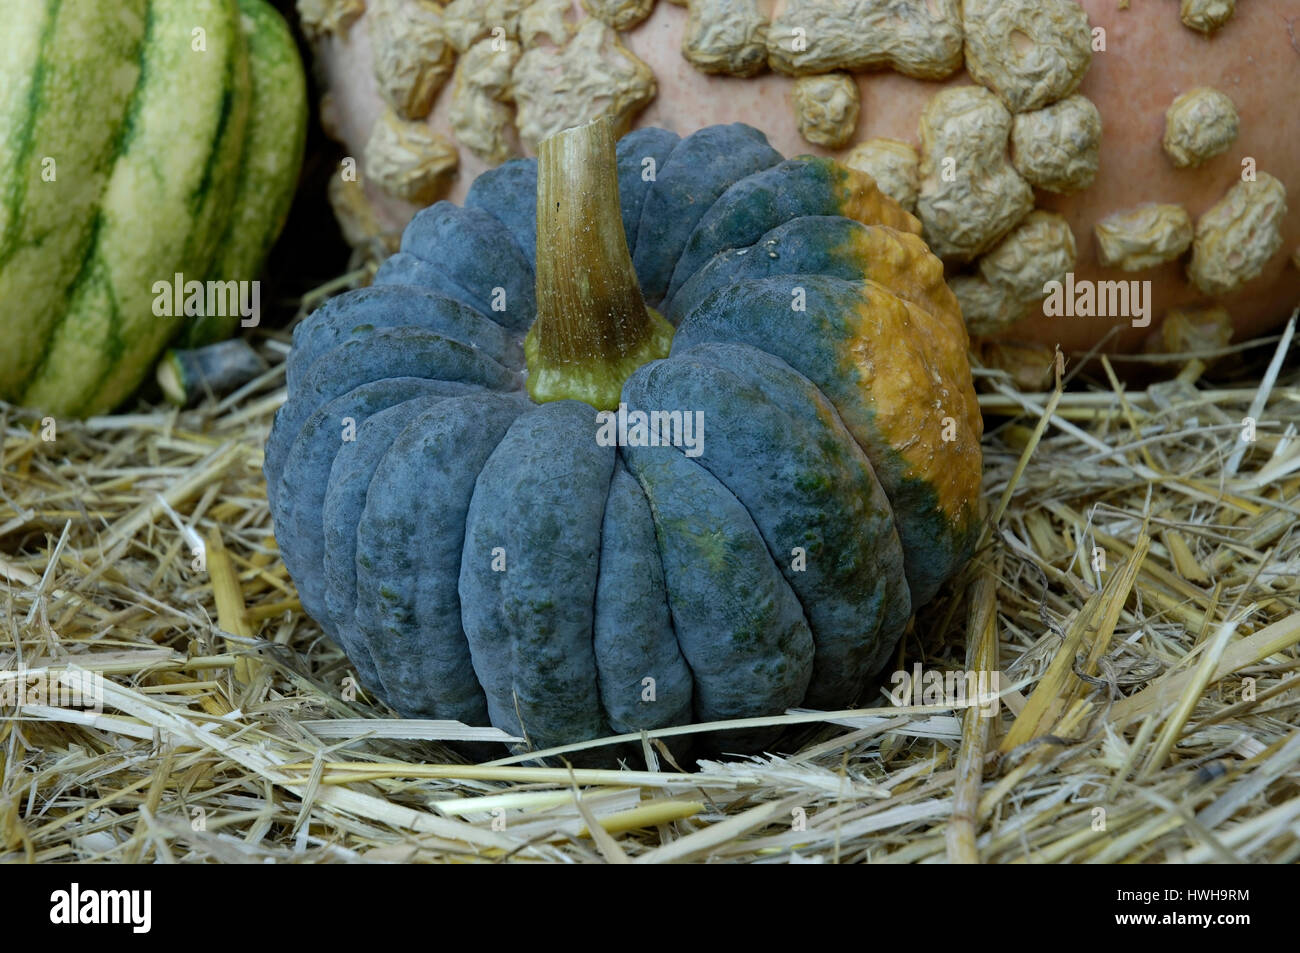 Pumpkins Black Futsu, Cucurbita pepo squashes Black Futsu, ornamental pumpkins ornamental pumpkin, garden pumpkin, pumpkin plants, Cucurbitaceae, , Pu Stock Photo